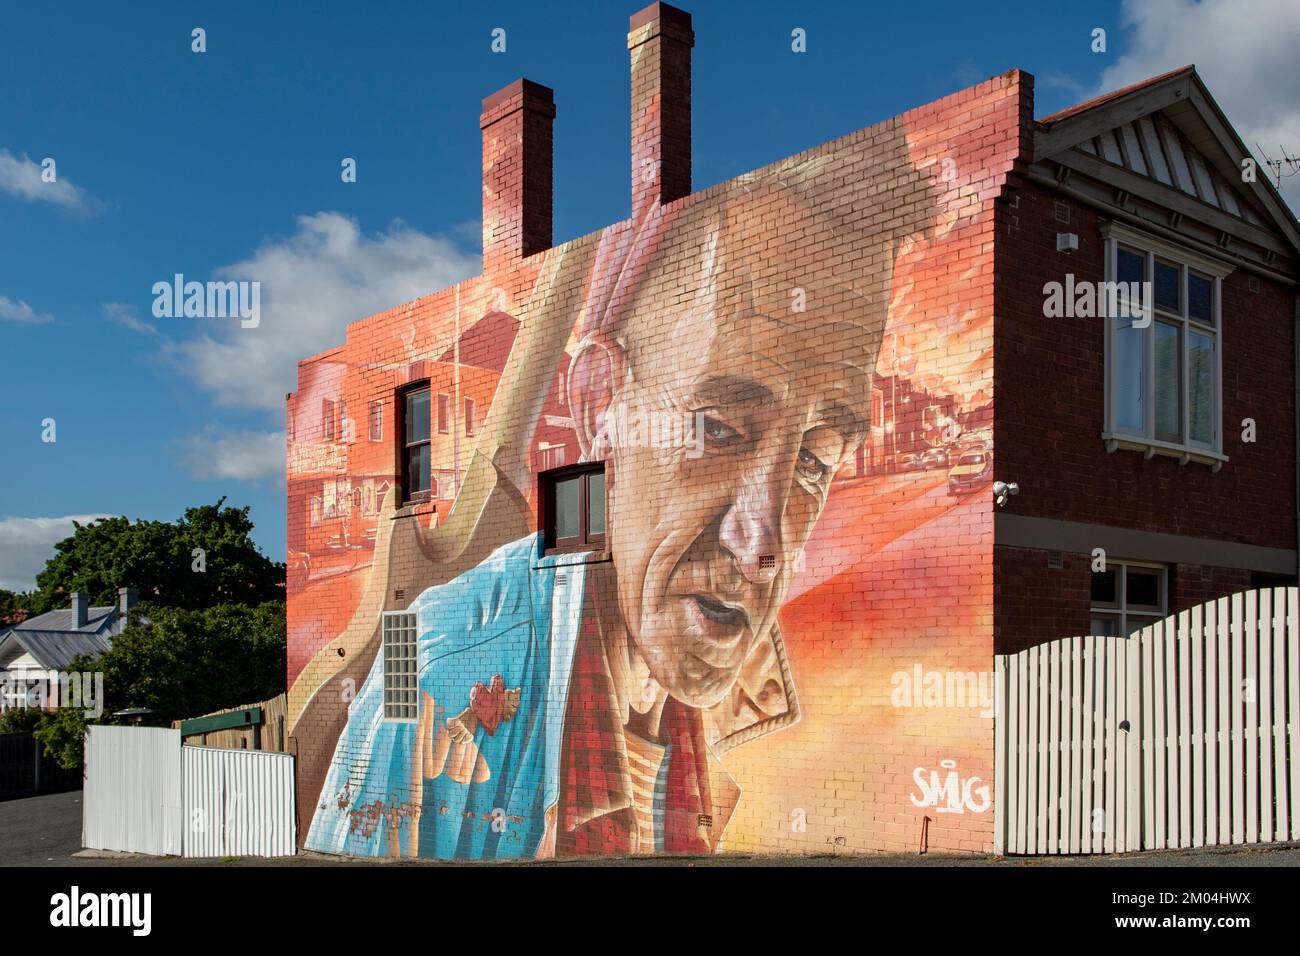 House Wall Mural by Smug, North Hobart, Tasmania, Australia Stock Photo